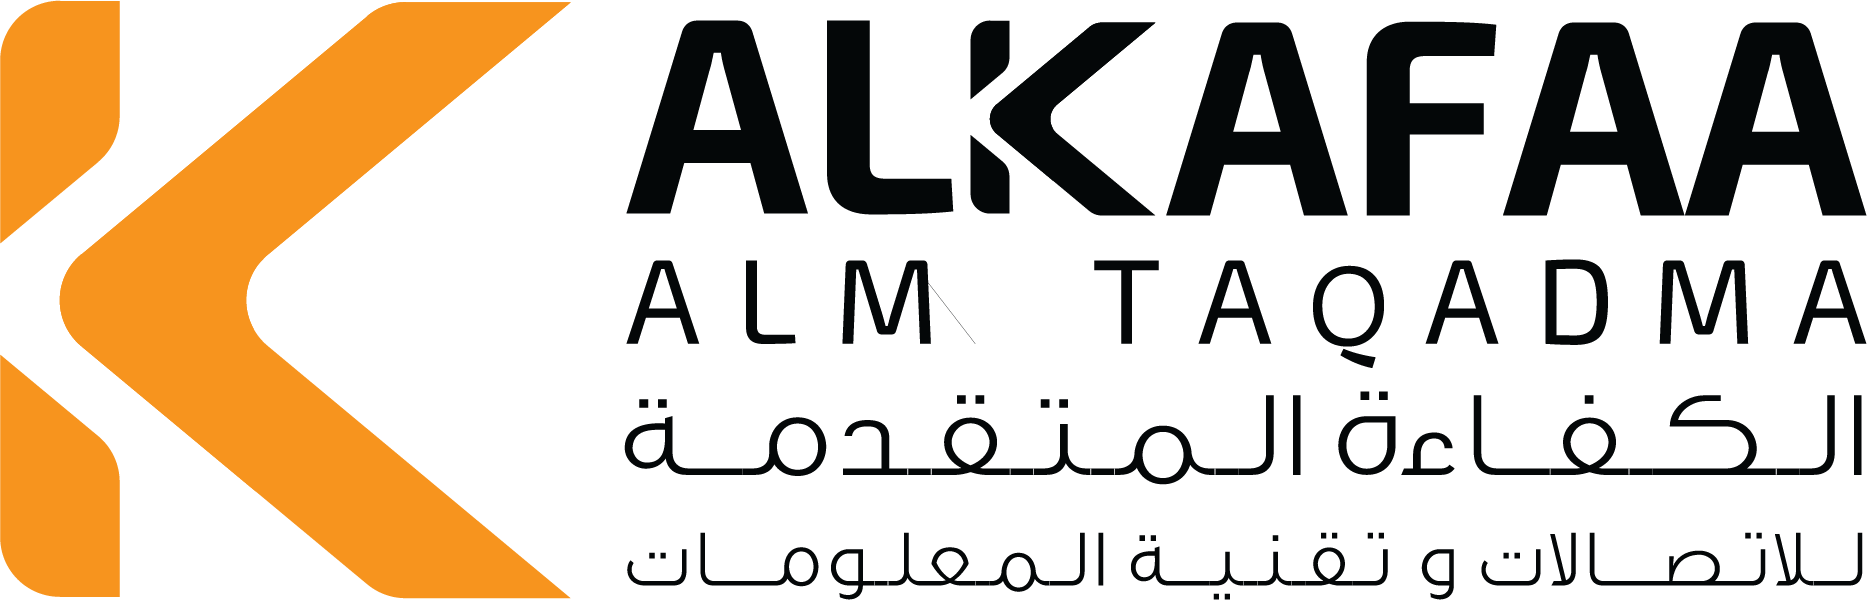 Alkafaa